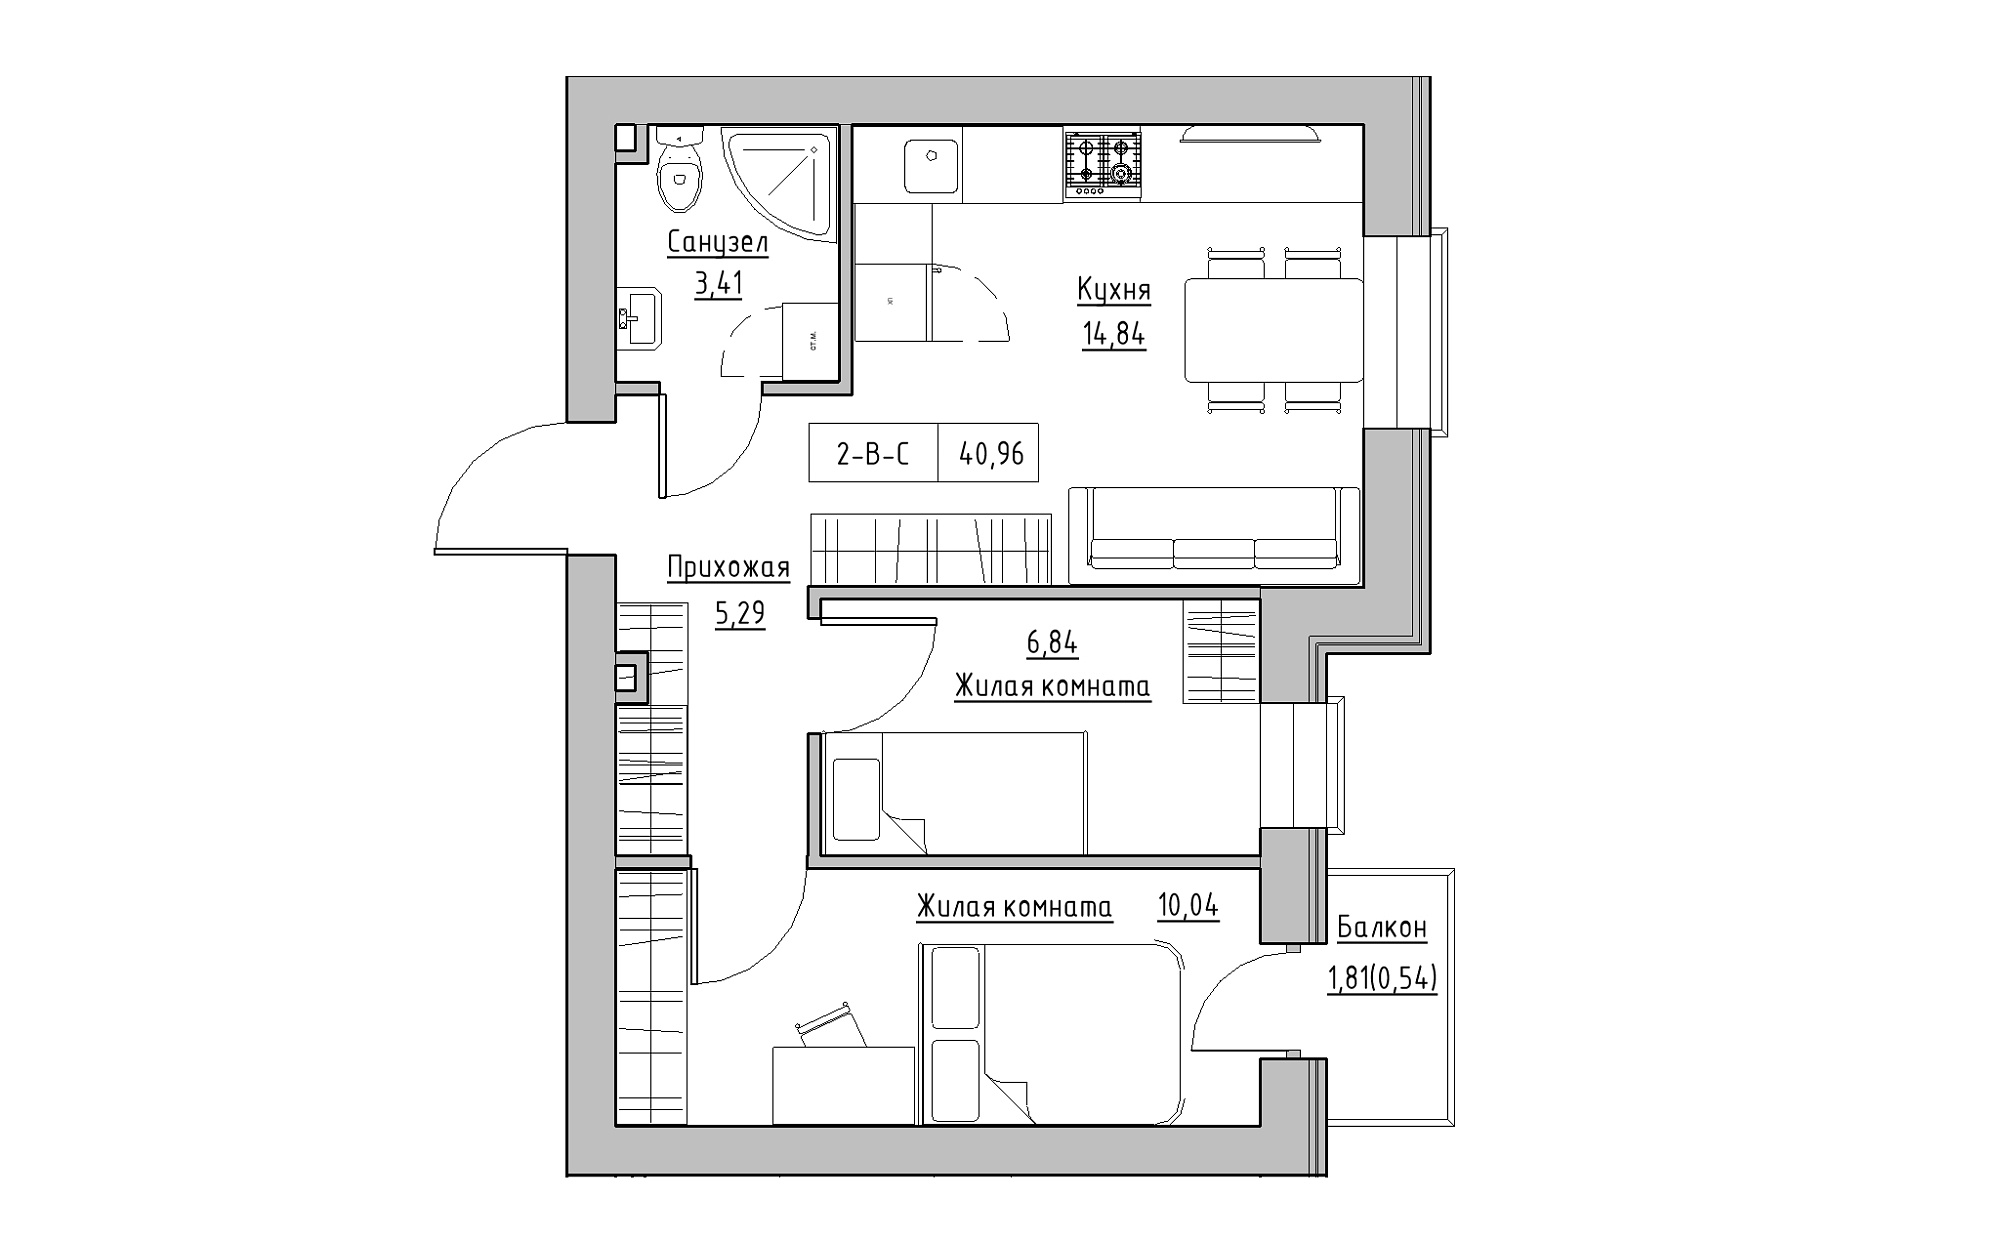 Planning 2-rm flats area 40.96m2, KS-022-03/0010.